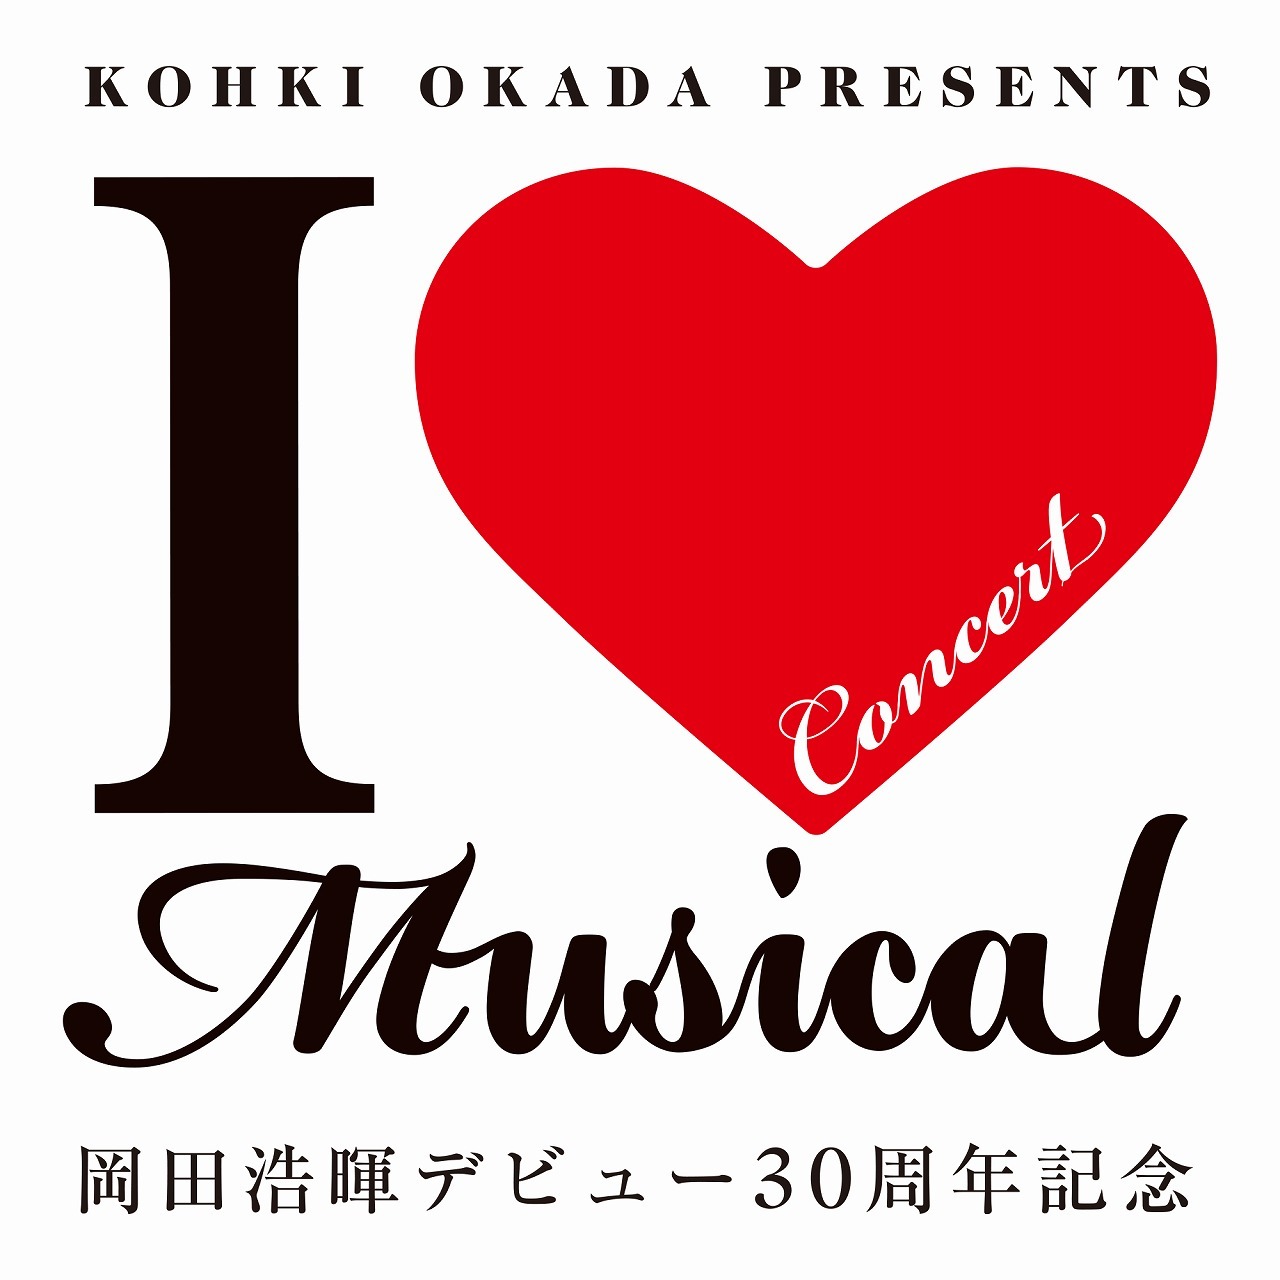 『KOHKI OKADA PRESENTS「I Love Musical 2021」〜岡田浩暉デビュー30周年記念〜』